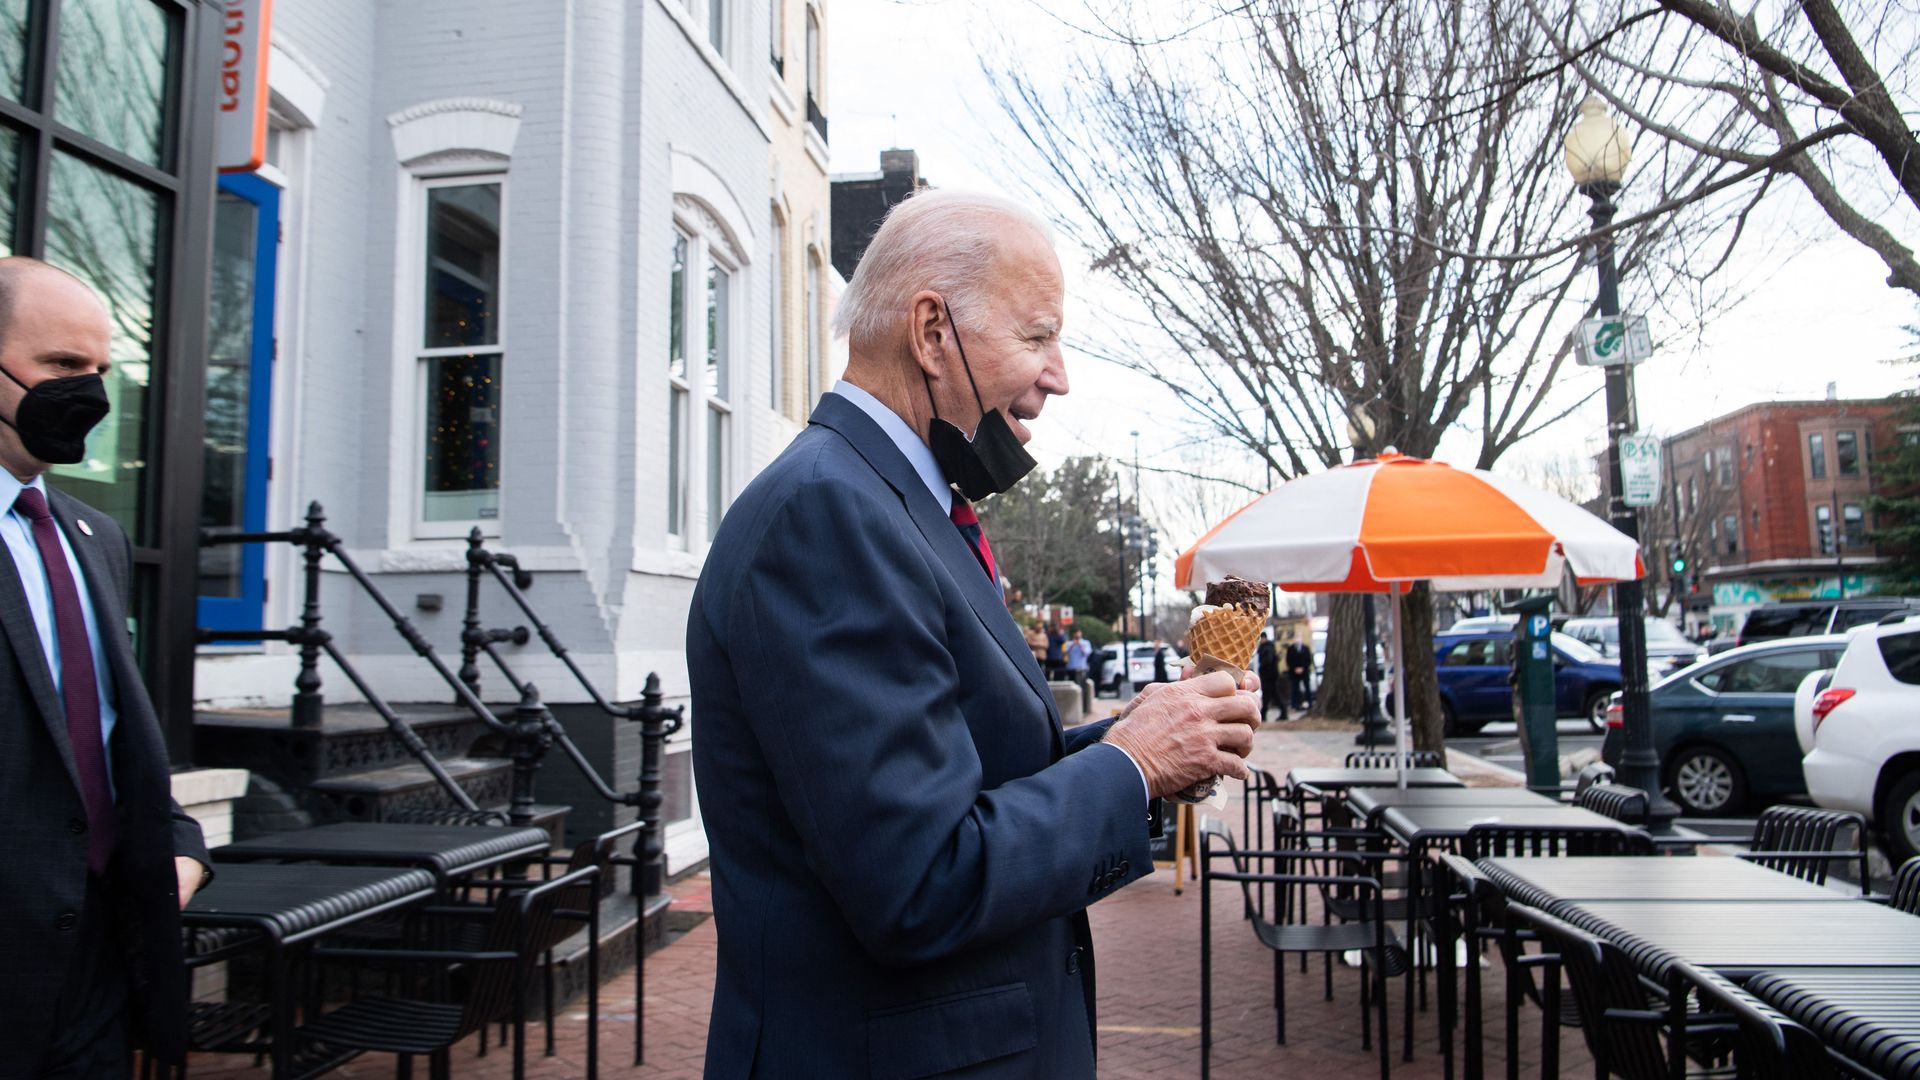 Joe Biden walks out of a store holding an ice cream cone